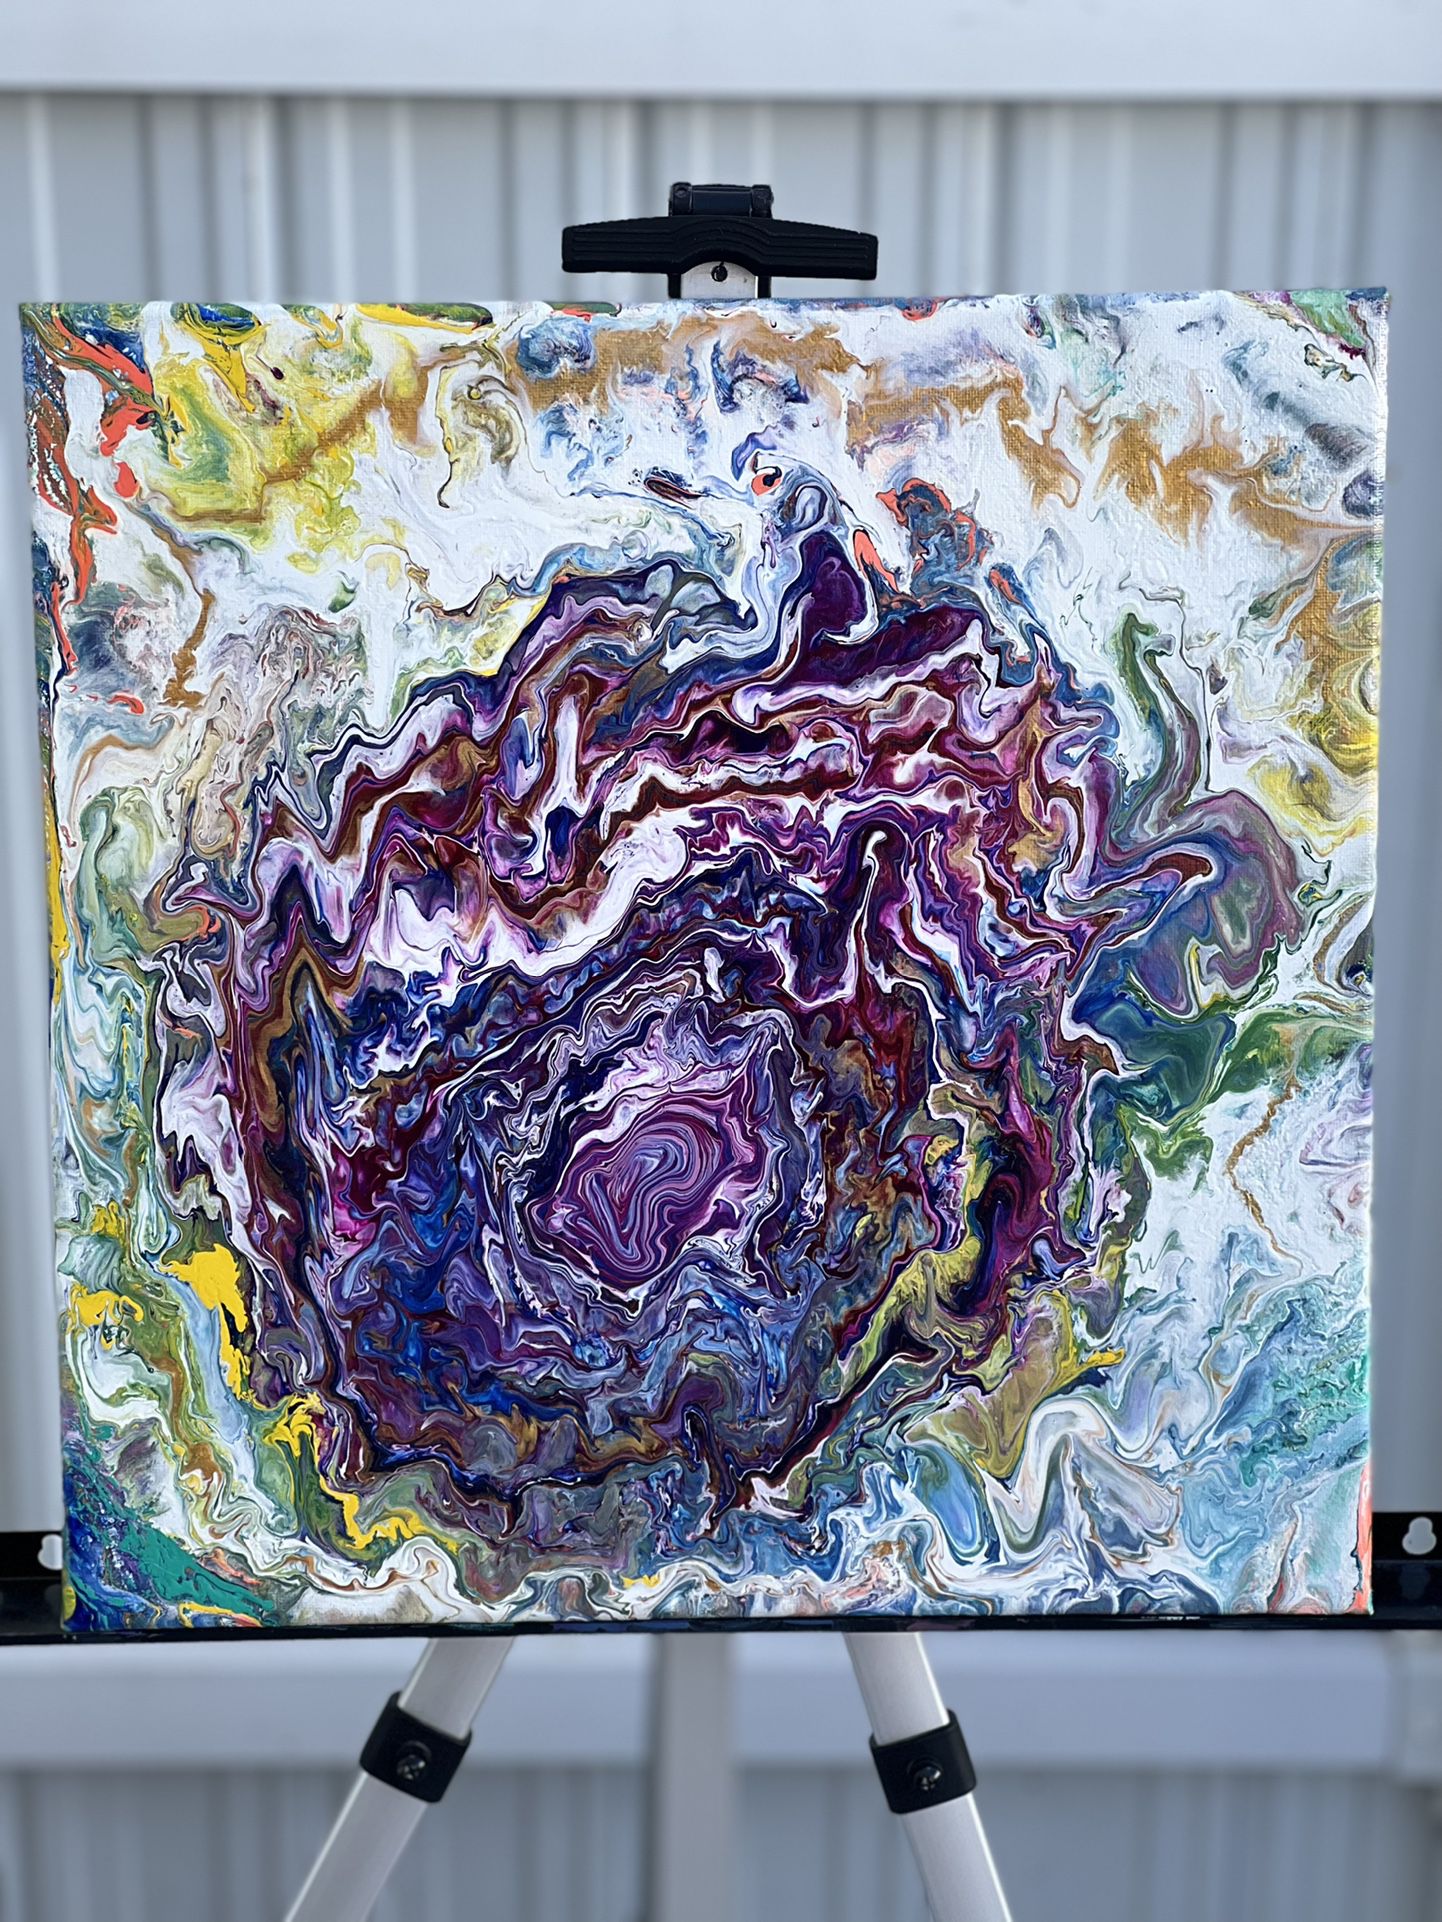 tornado eye / Pouring Arts - Abstract 